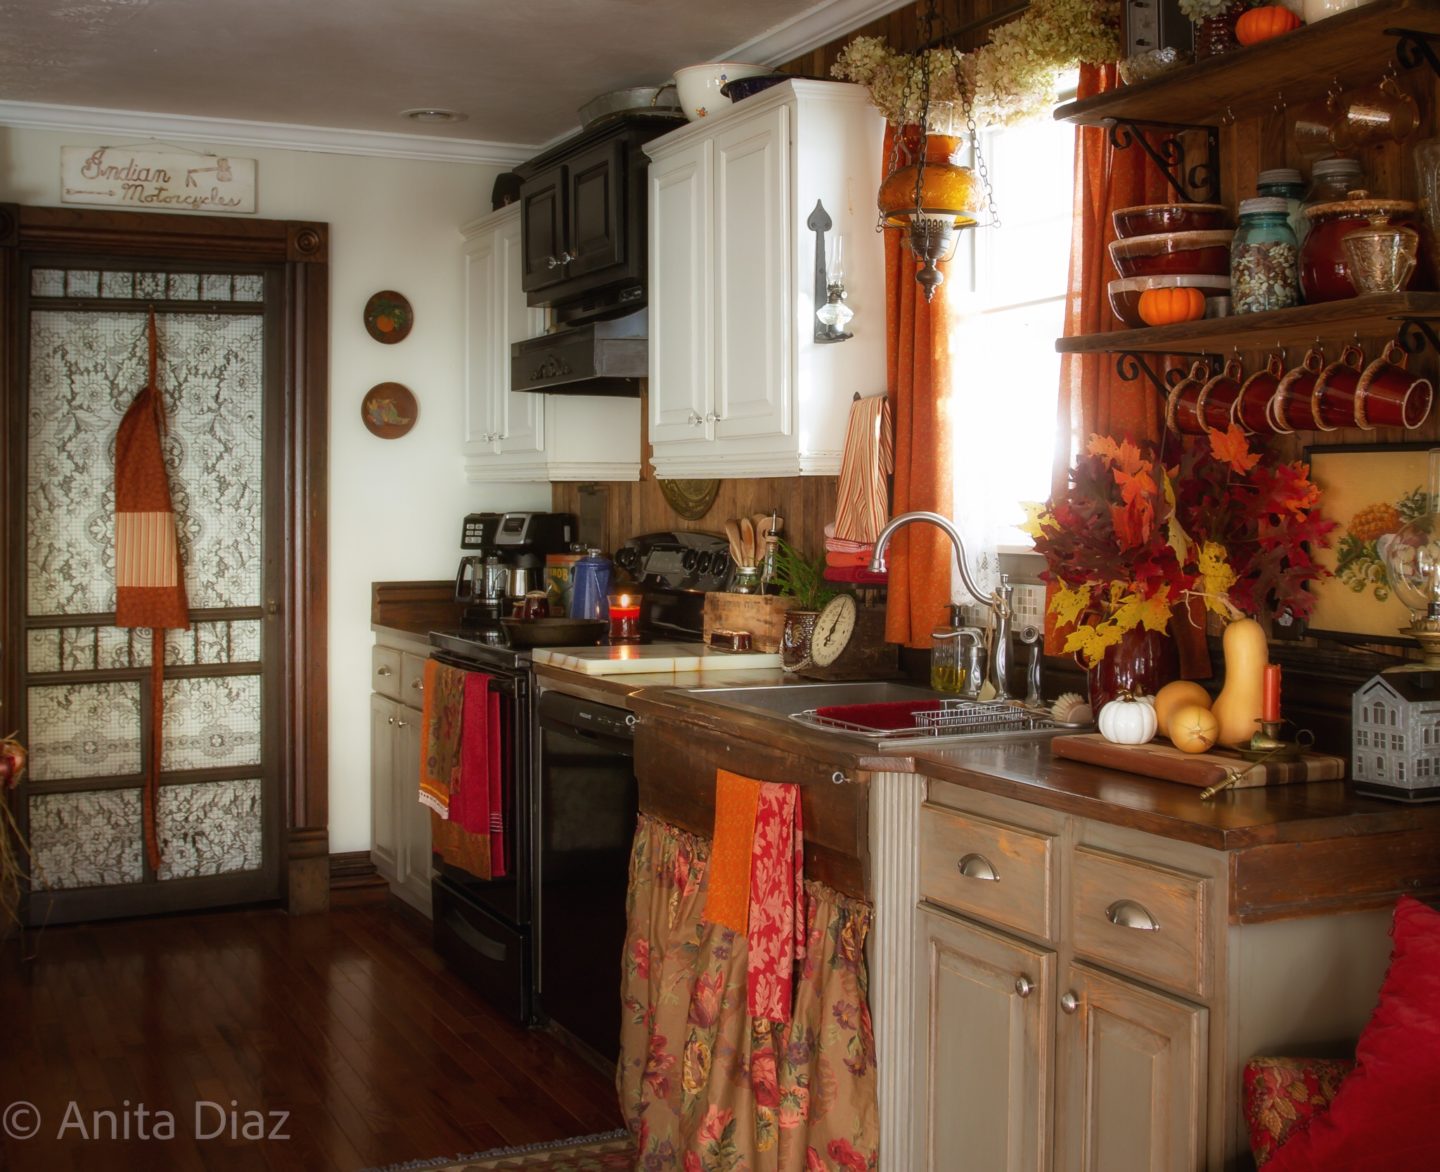 5 Cozy Farmhouse Kitchen Decor Ideas for Fall